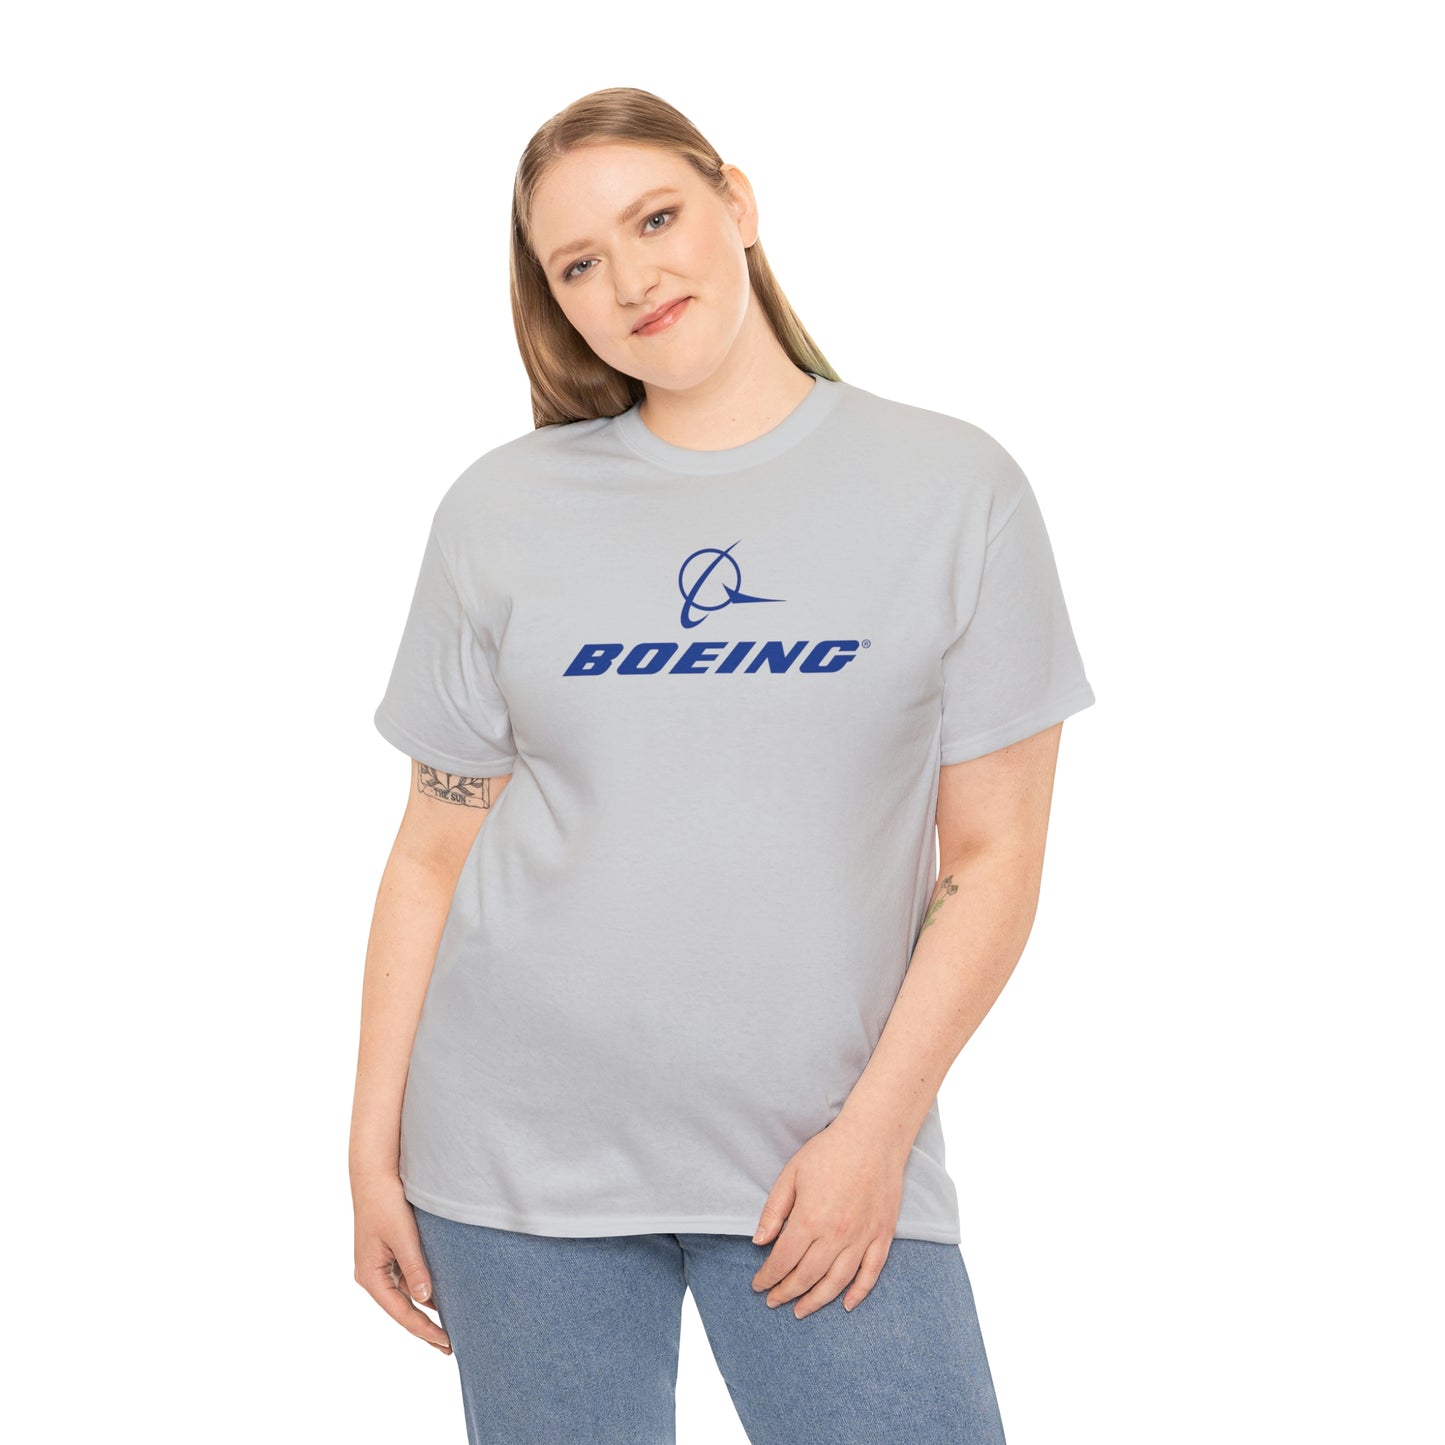 Boeing T-Shirt